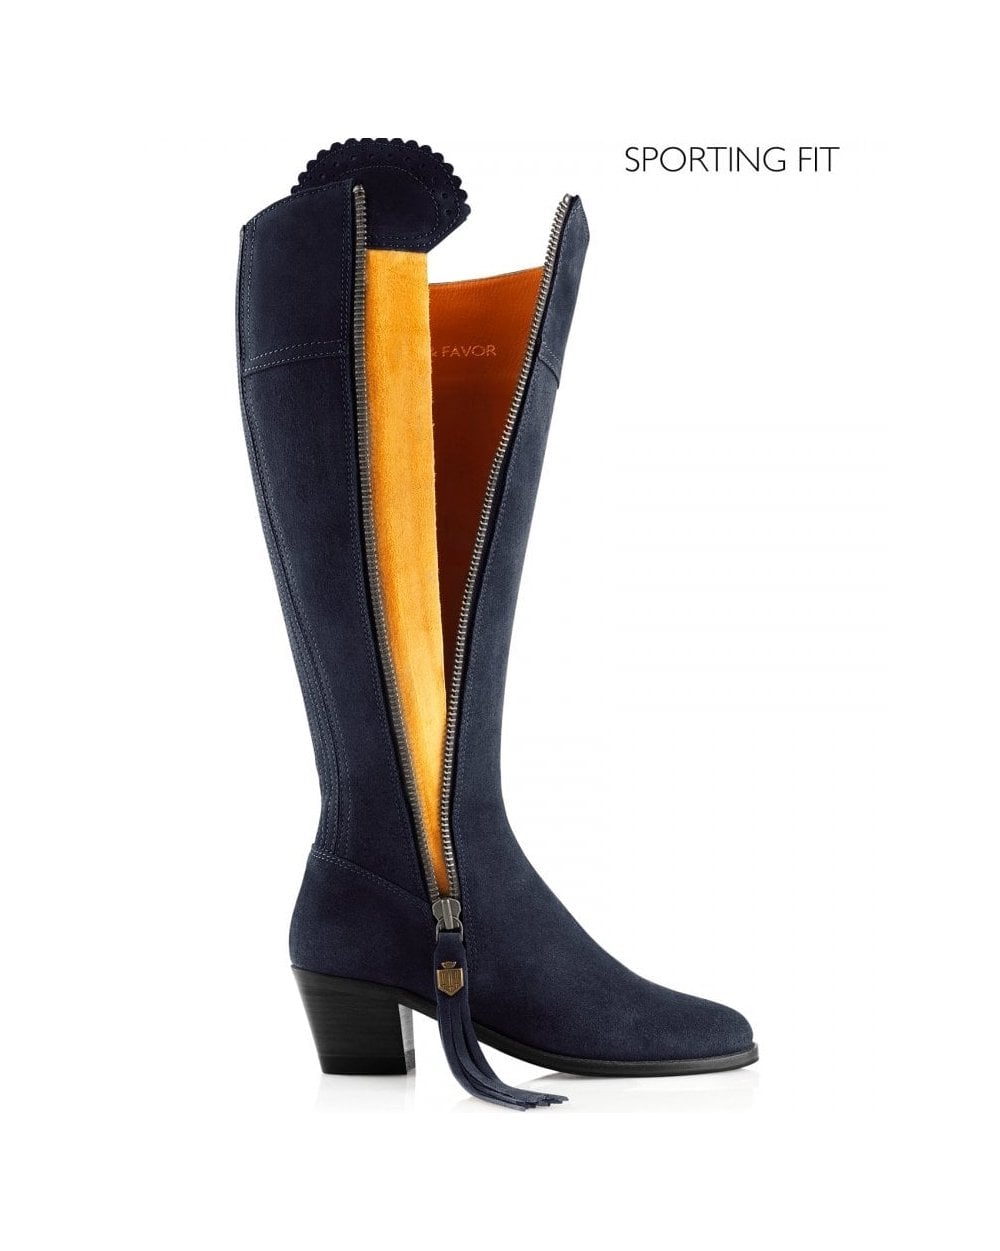 Sporting Fit Heeled Regina Boots